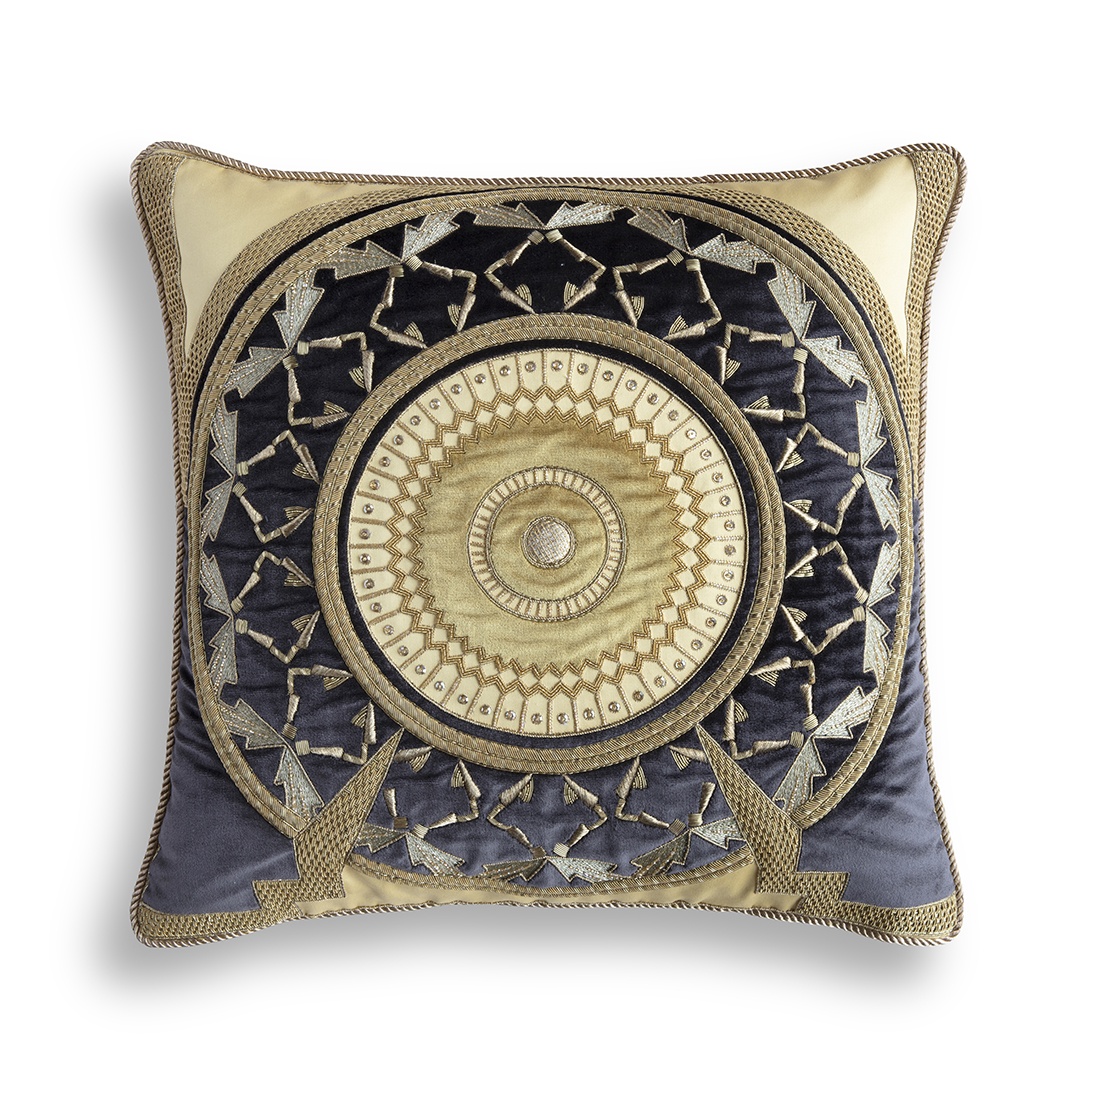 Ettore cushion in Capri silk velvet - Midnight, Almond - Beaumont & Fletcher